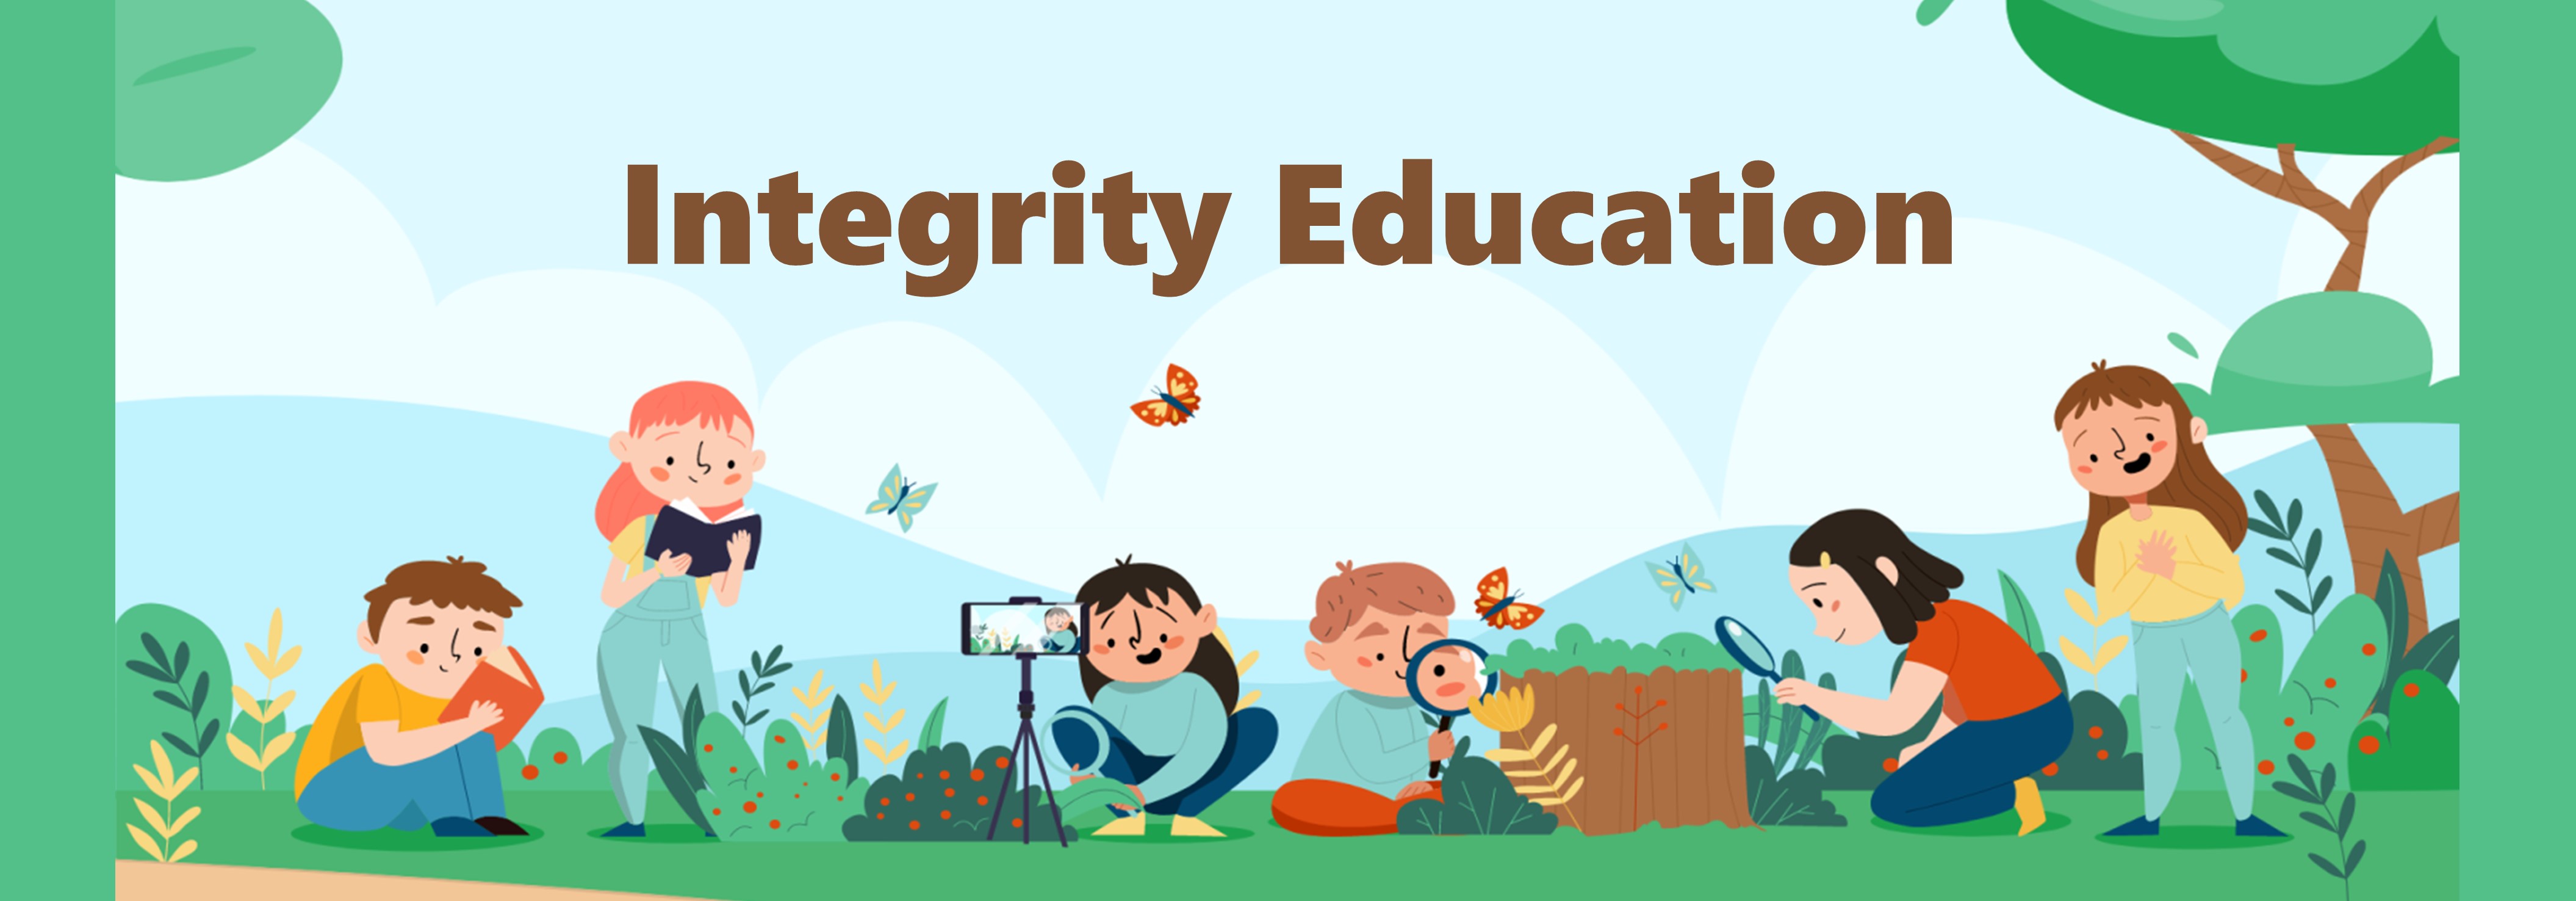 Integrity Education